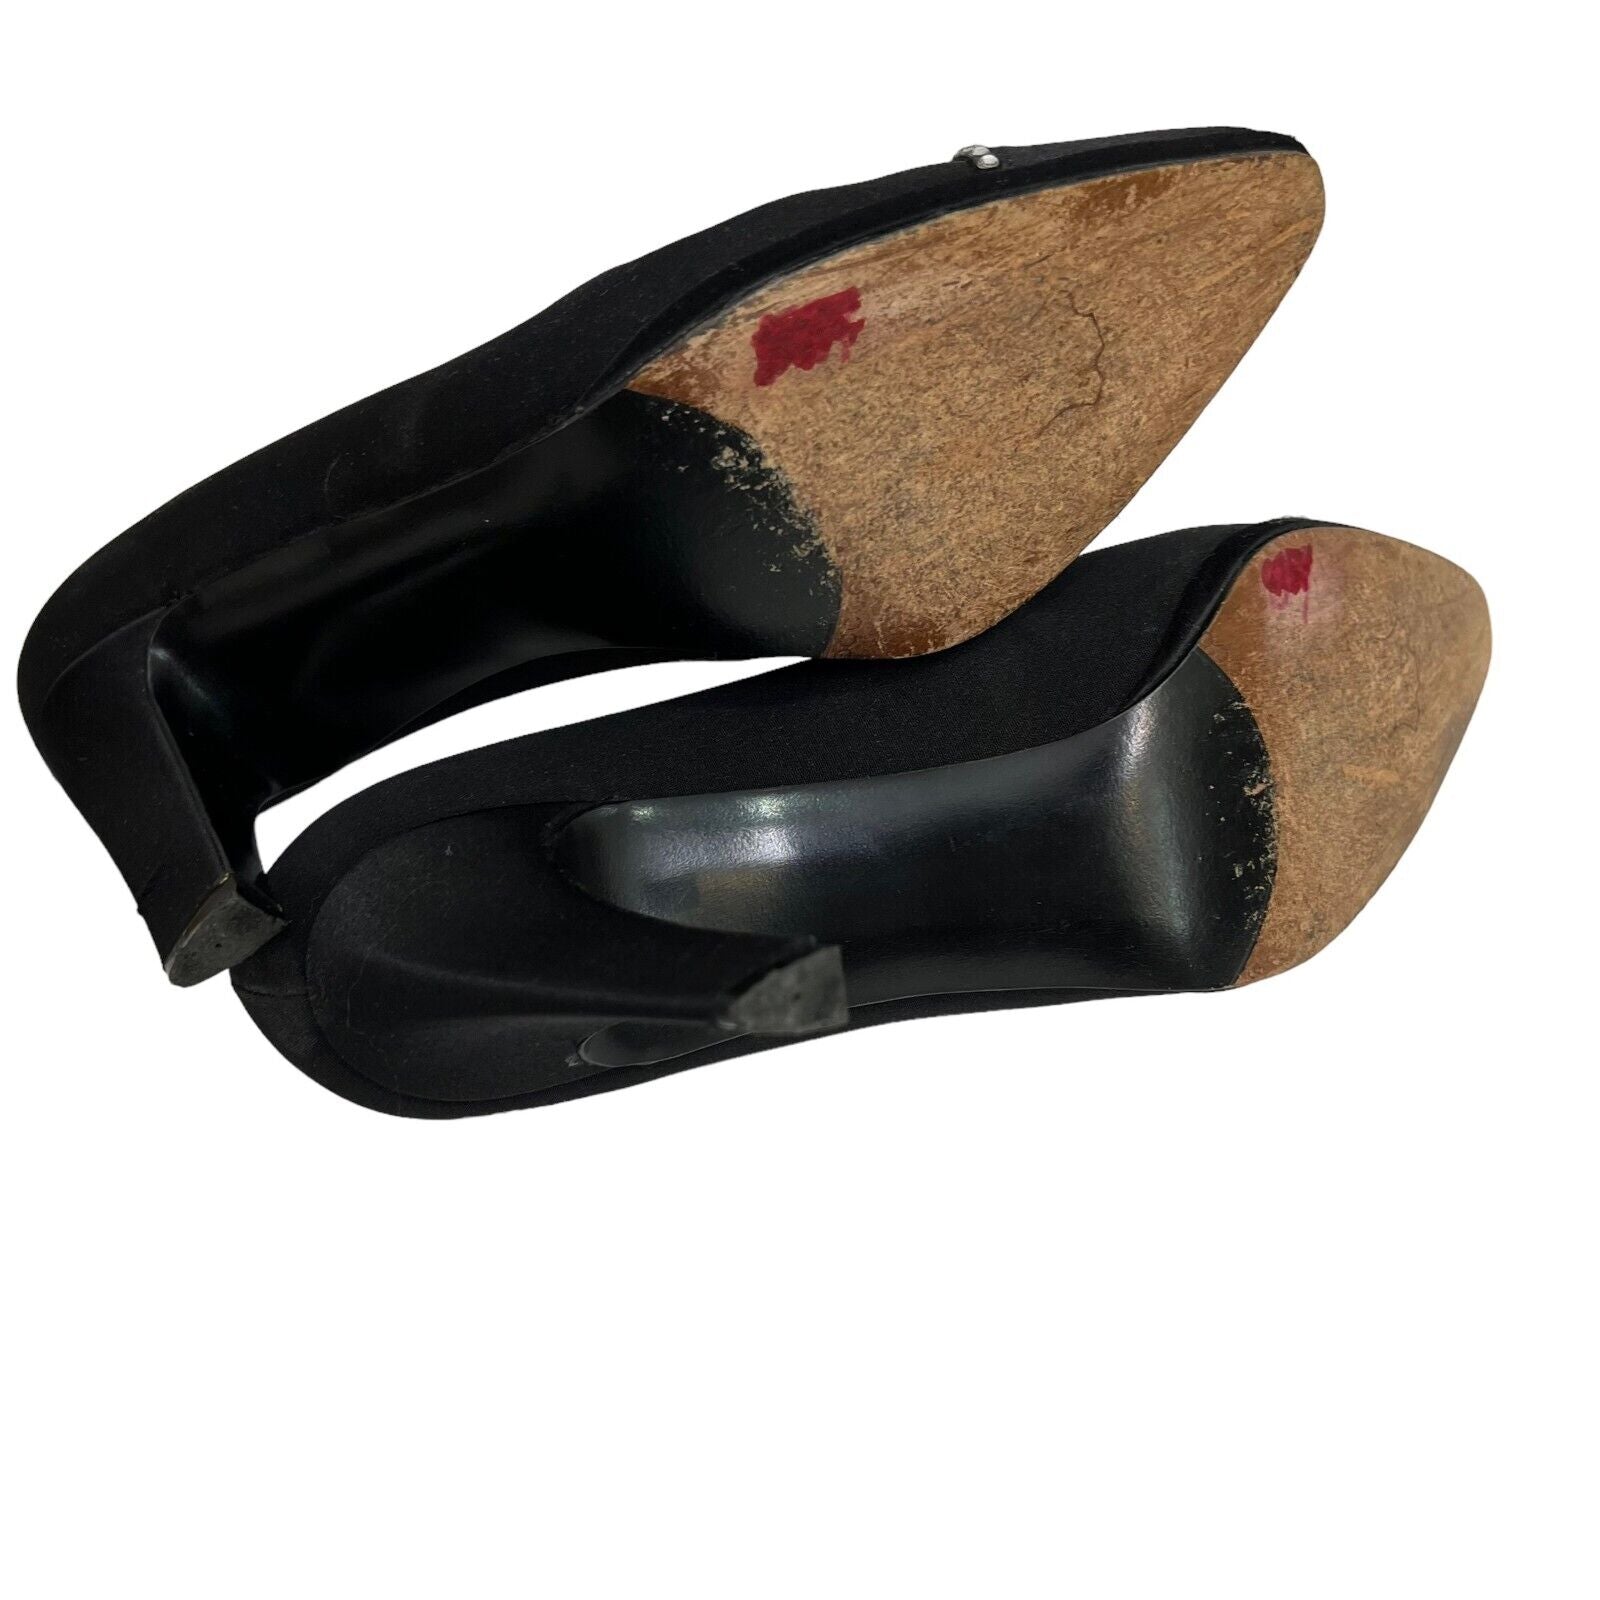 Stuart Weitzman Neiman Marcus Black High Heel Shoes Pumps w Rhinestones Size 6